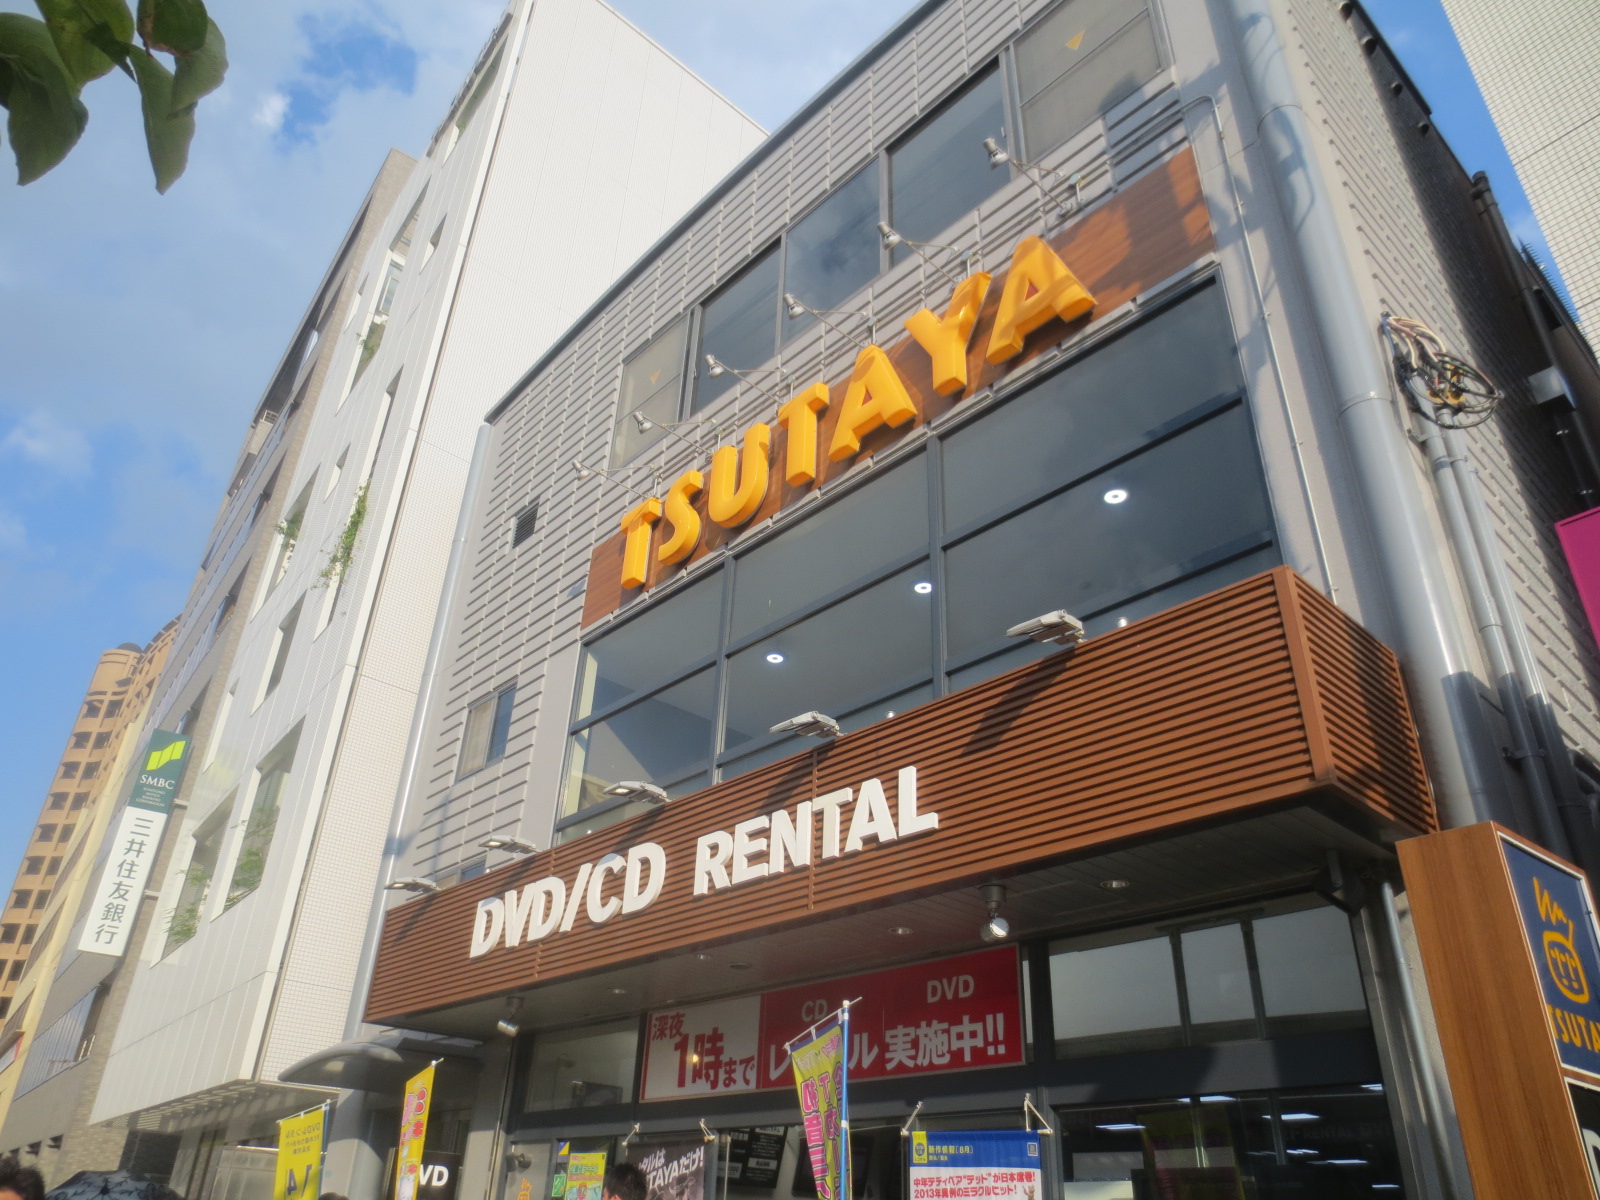 Rental video. TSUTAYA Okamoto shop 820m up (video rental)